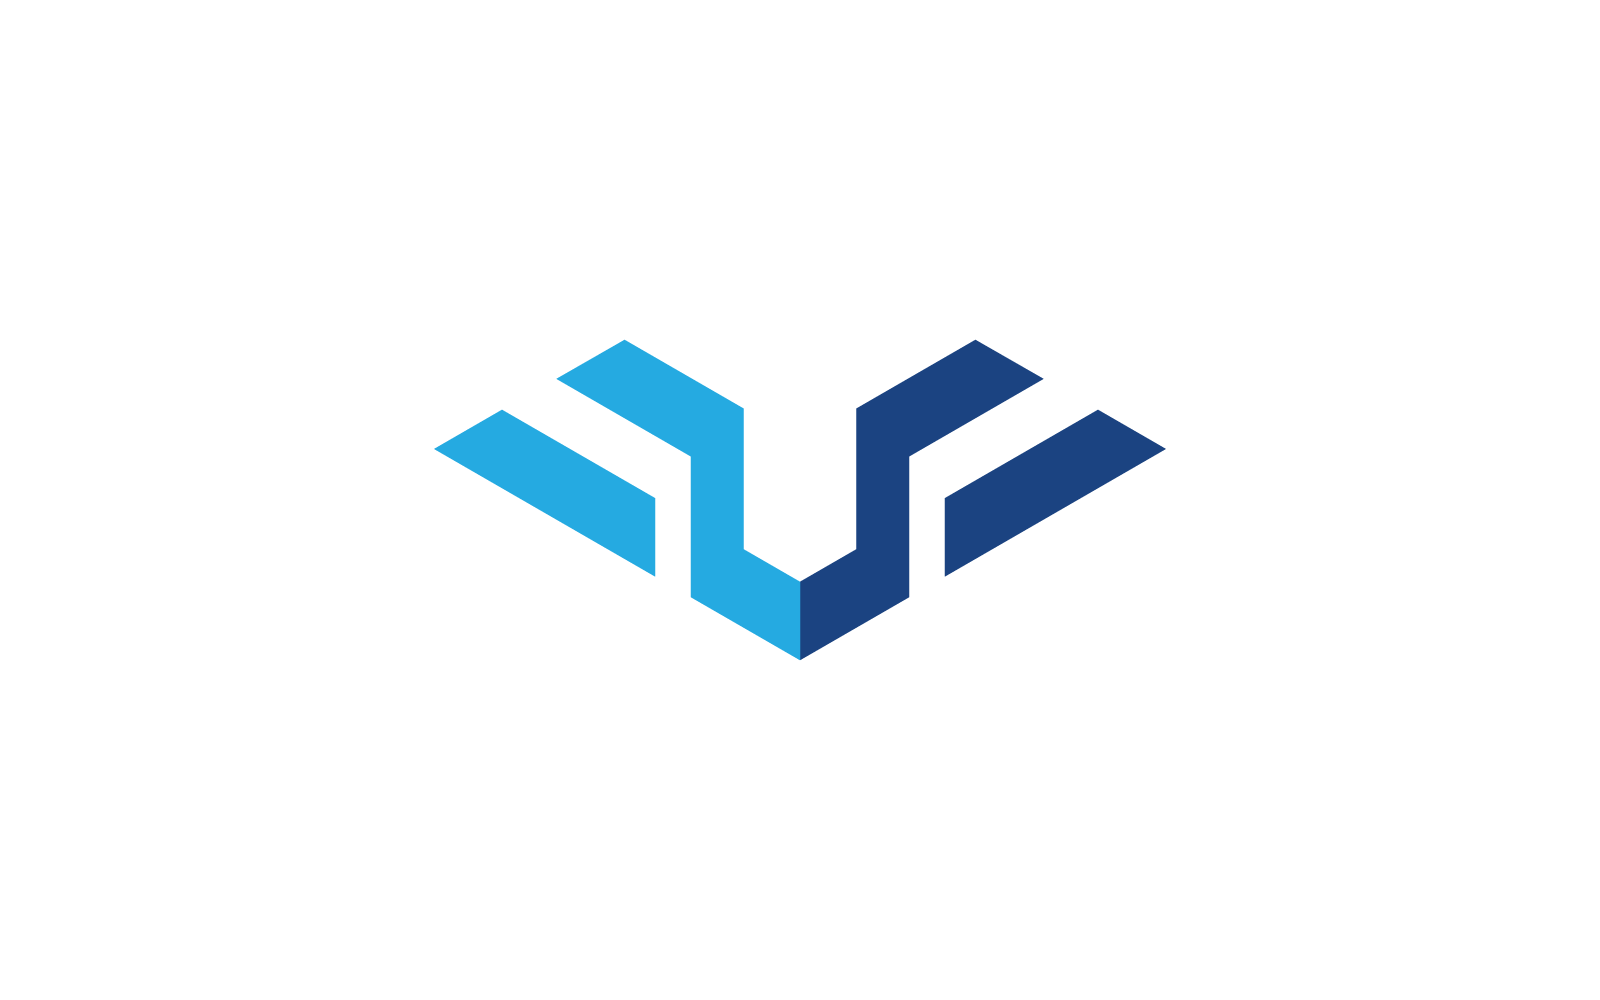 U initial Wing illustration logo vector design